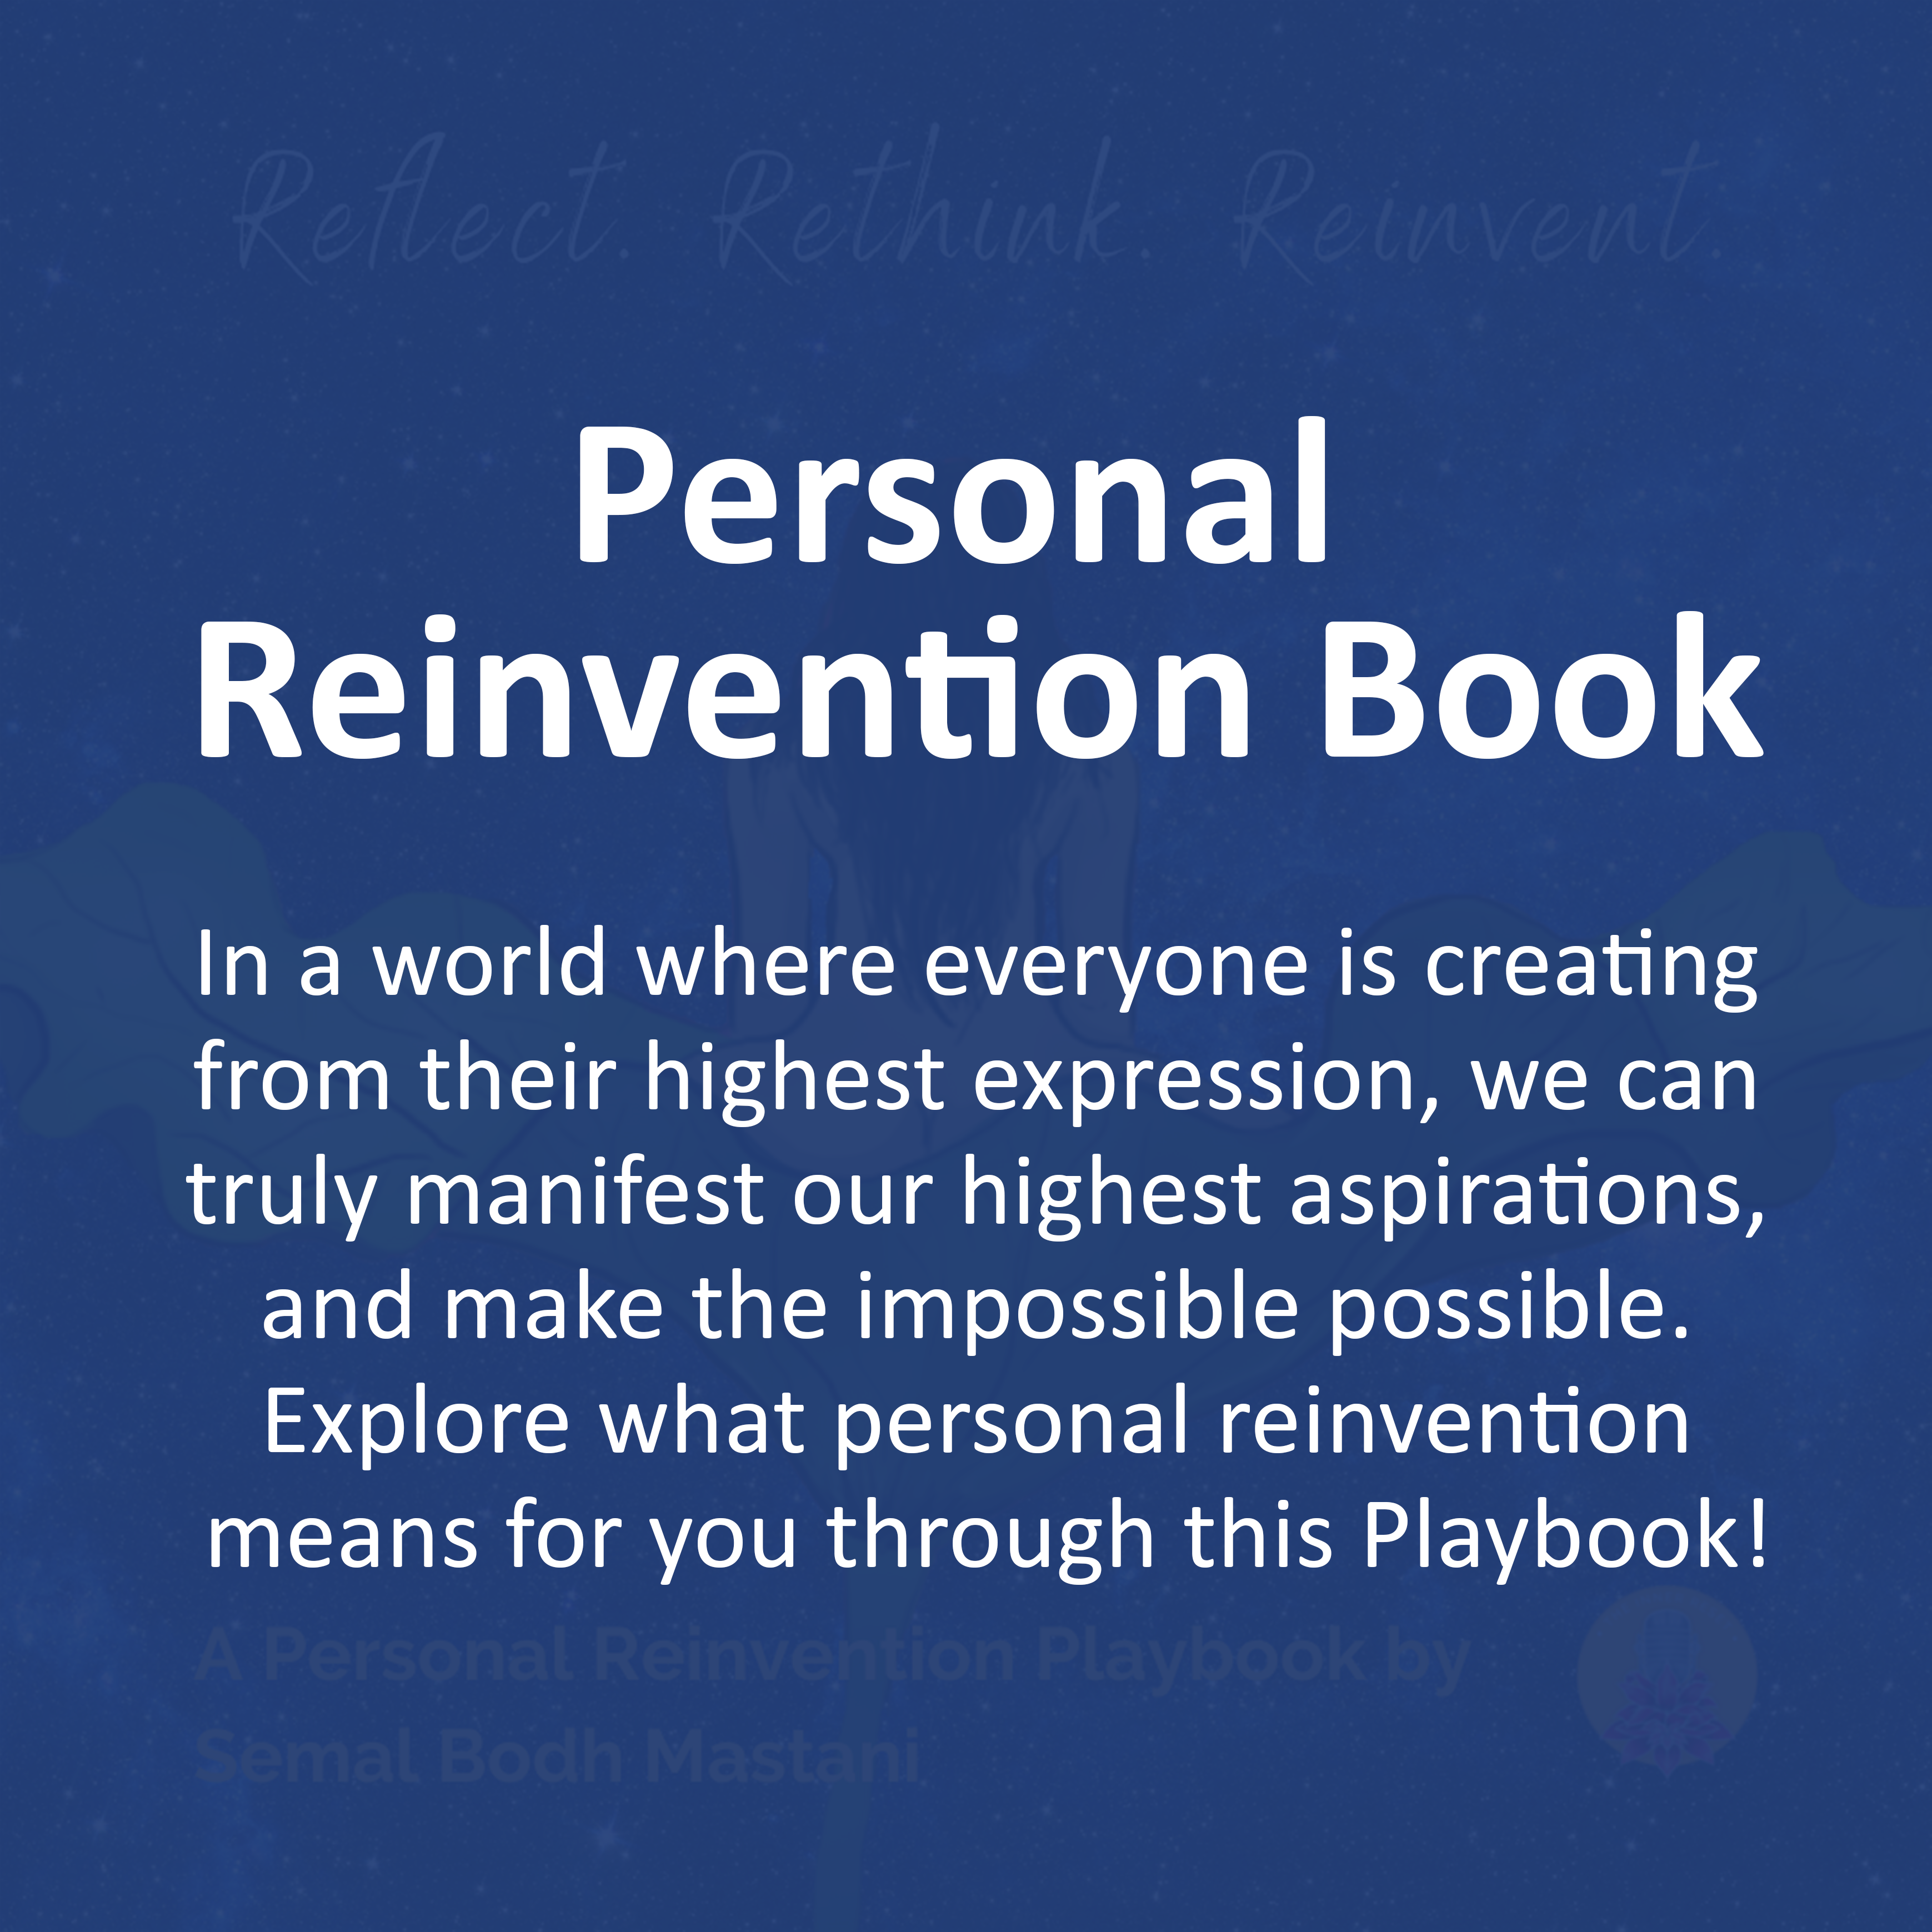 Personal Reinvention Playbook: "Reflect. Rethink. Reinvent."